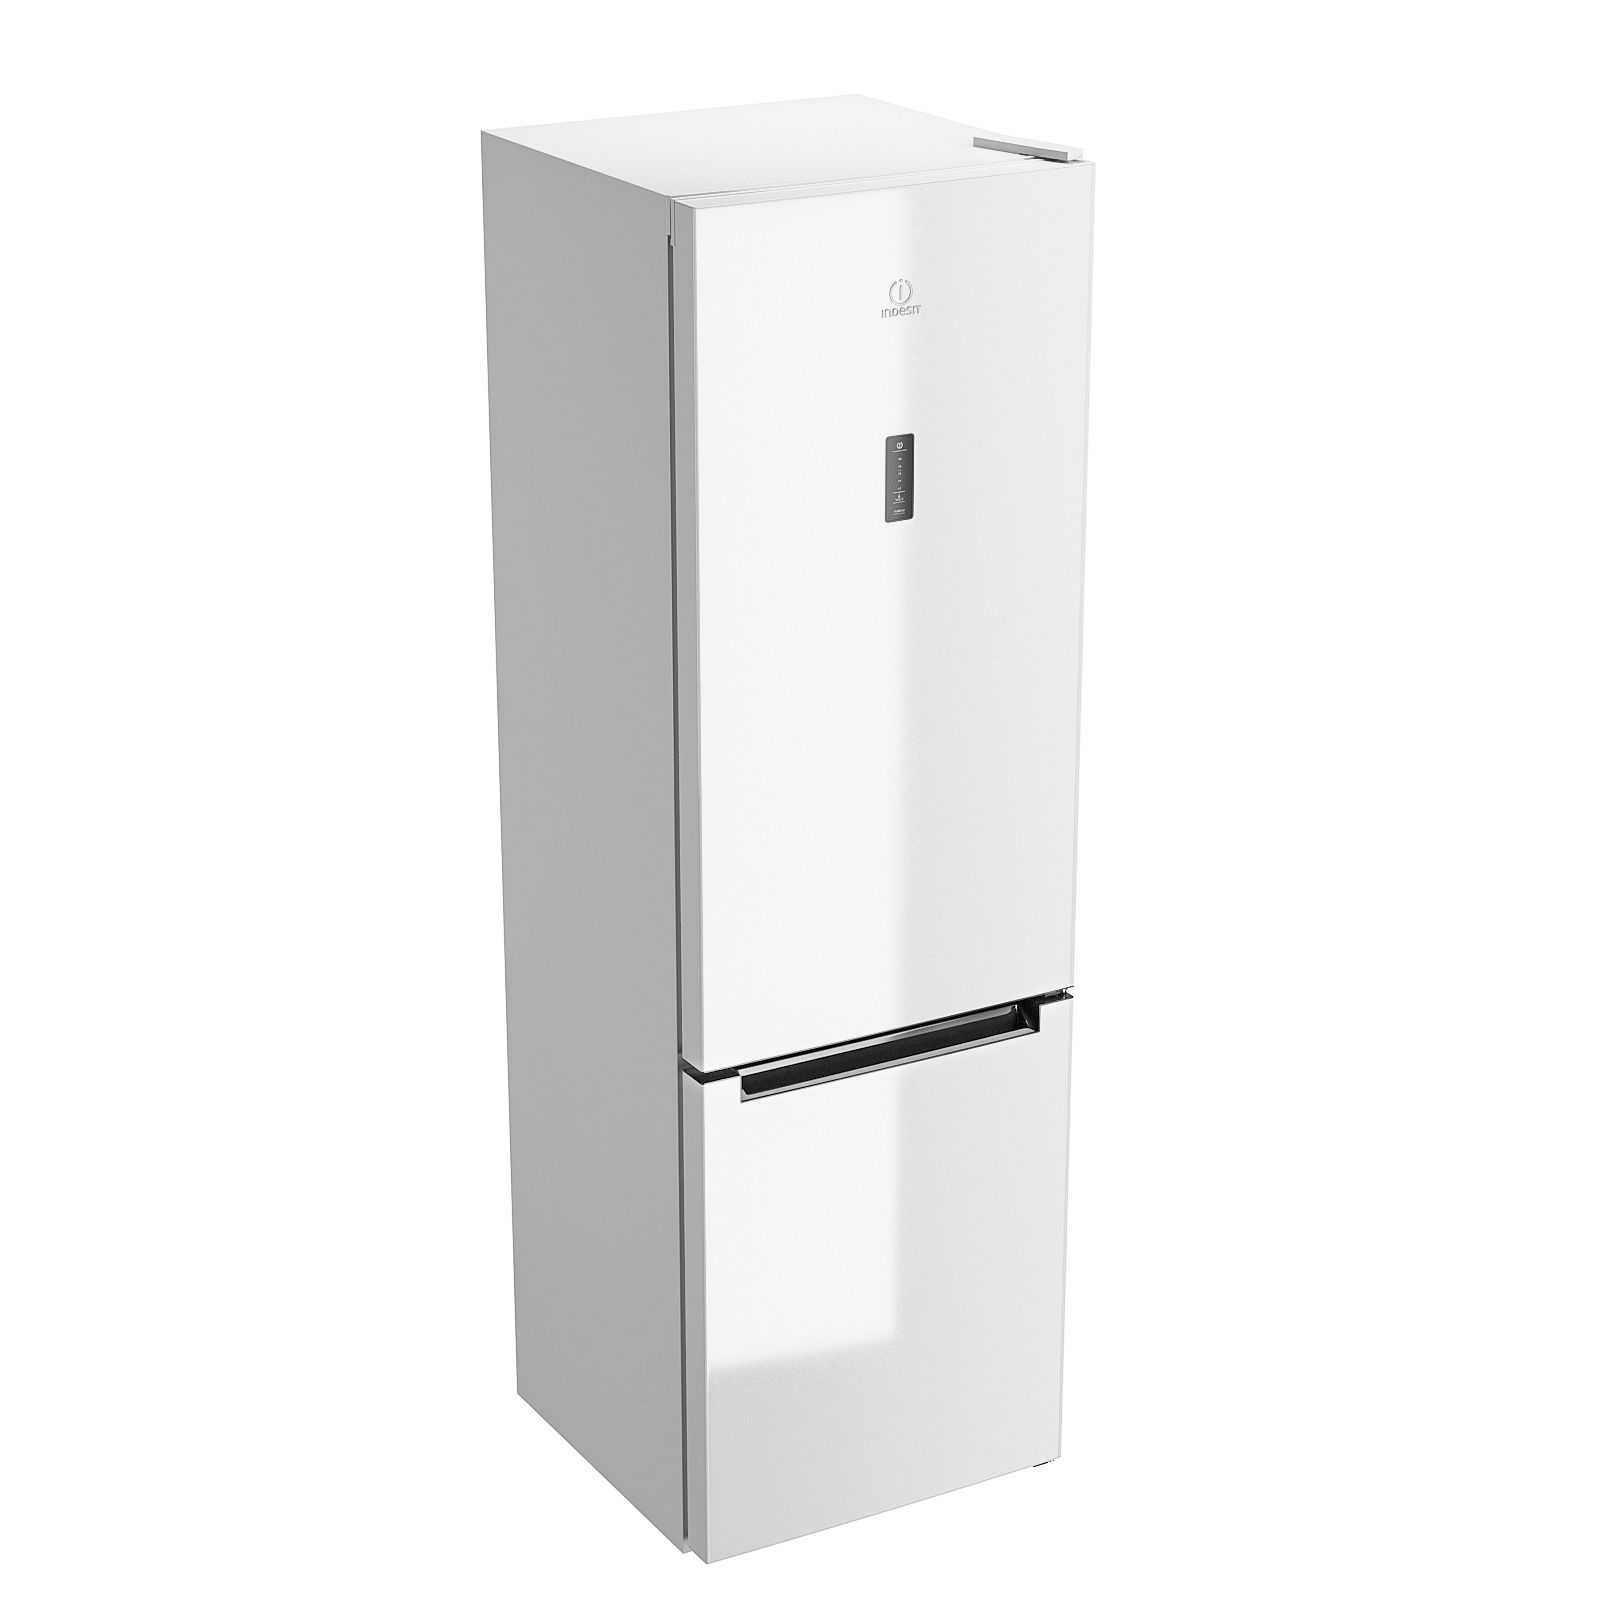 Индезит 5200 w. Холодильник Индезит 5200w. Df5200w.